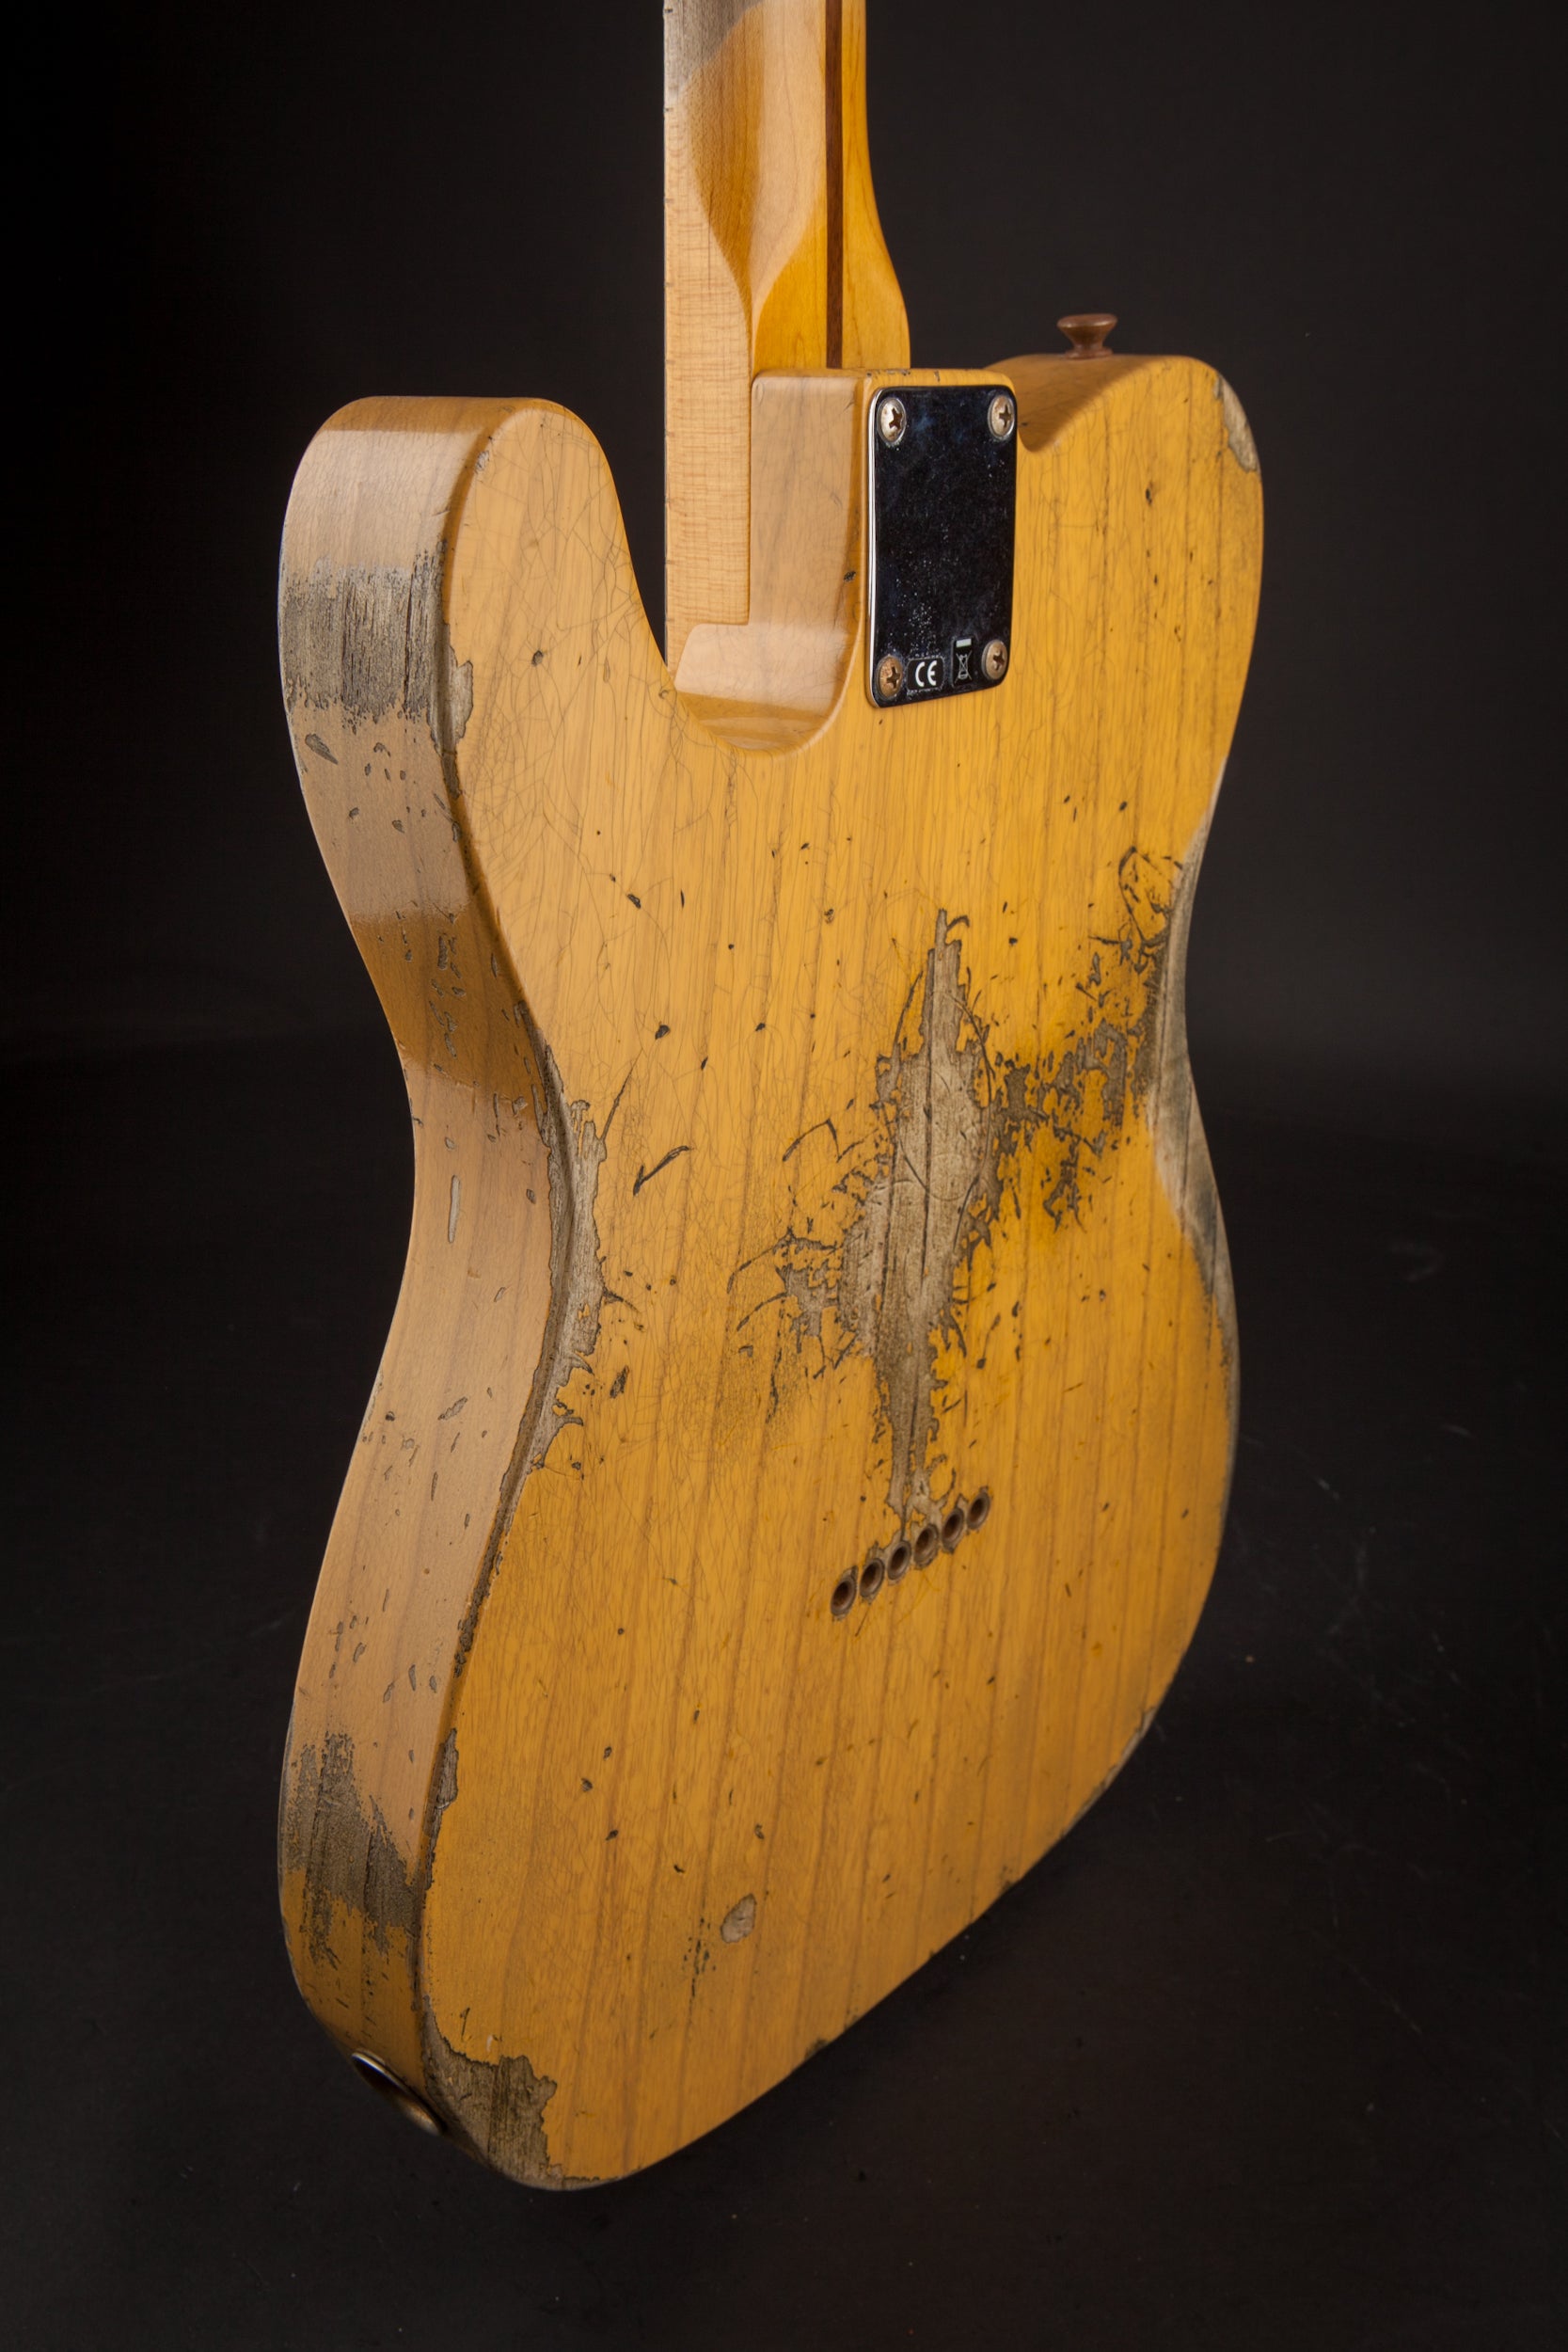 Fender: Telecaster 1952 Heavy Relic Butterscotch Blonde #R106621